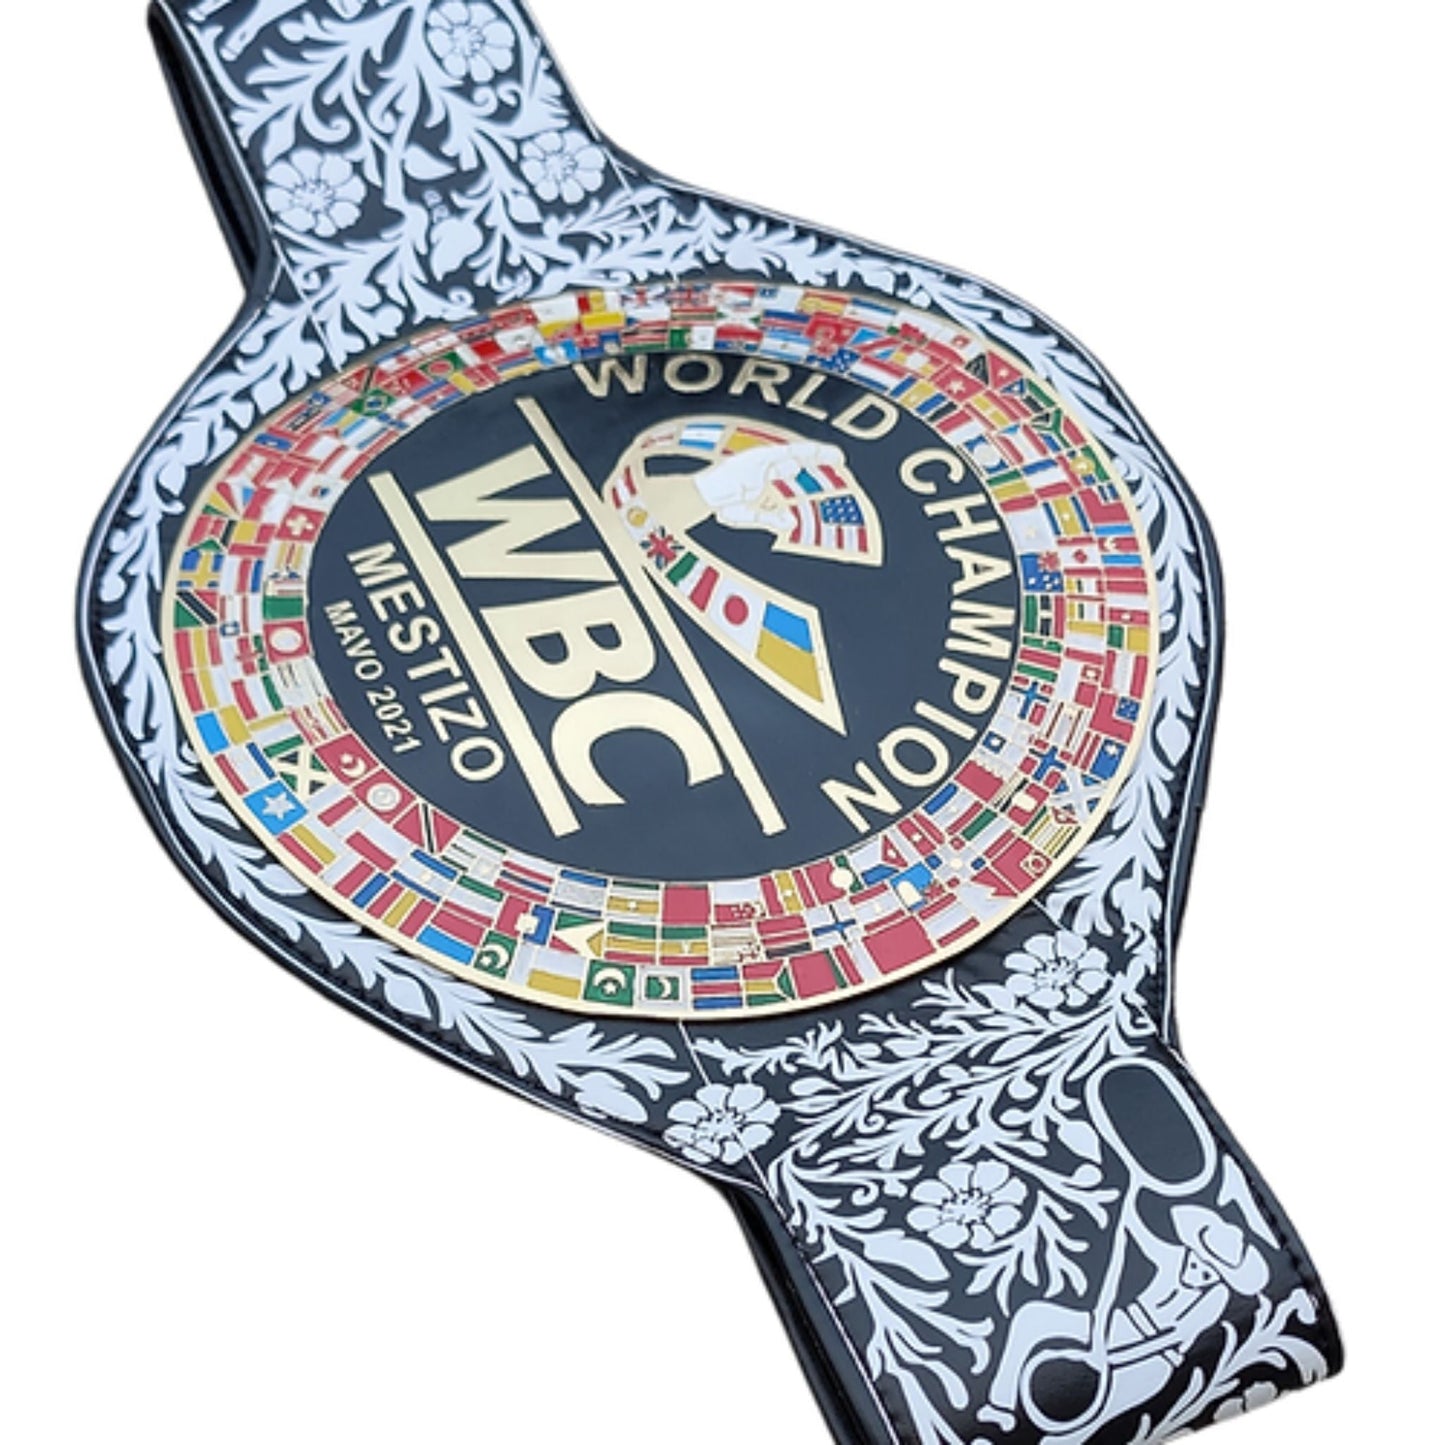 WBC MESTIZO MAVO 2021 Wrestling Boxing Replica Title Belt Adult size